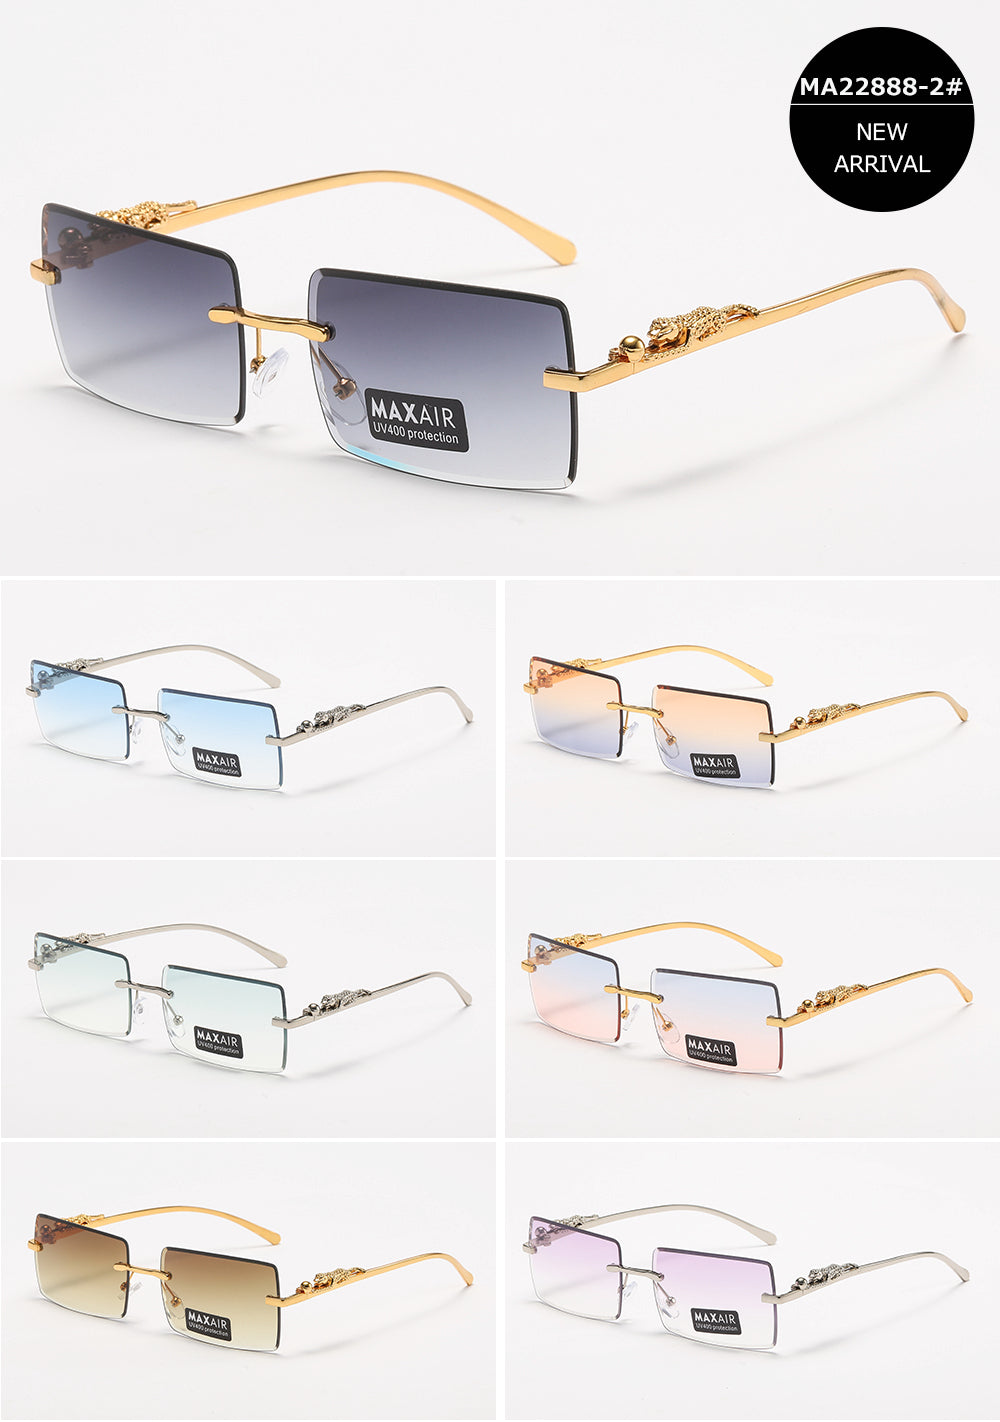 Maxair 22888-2 Sunglasses